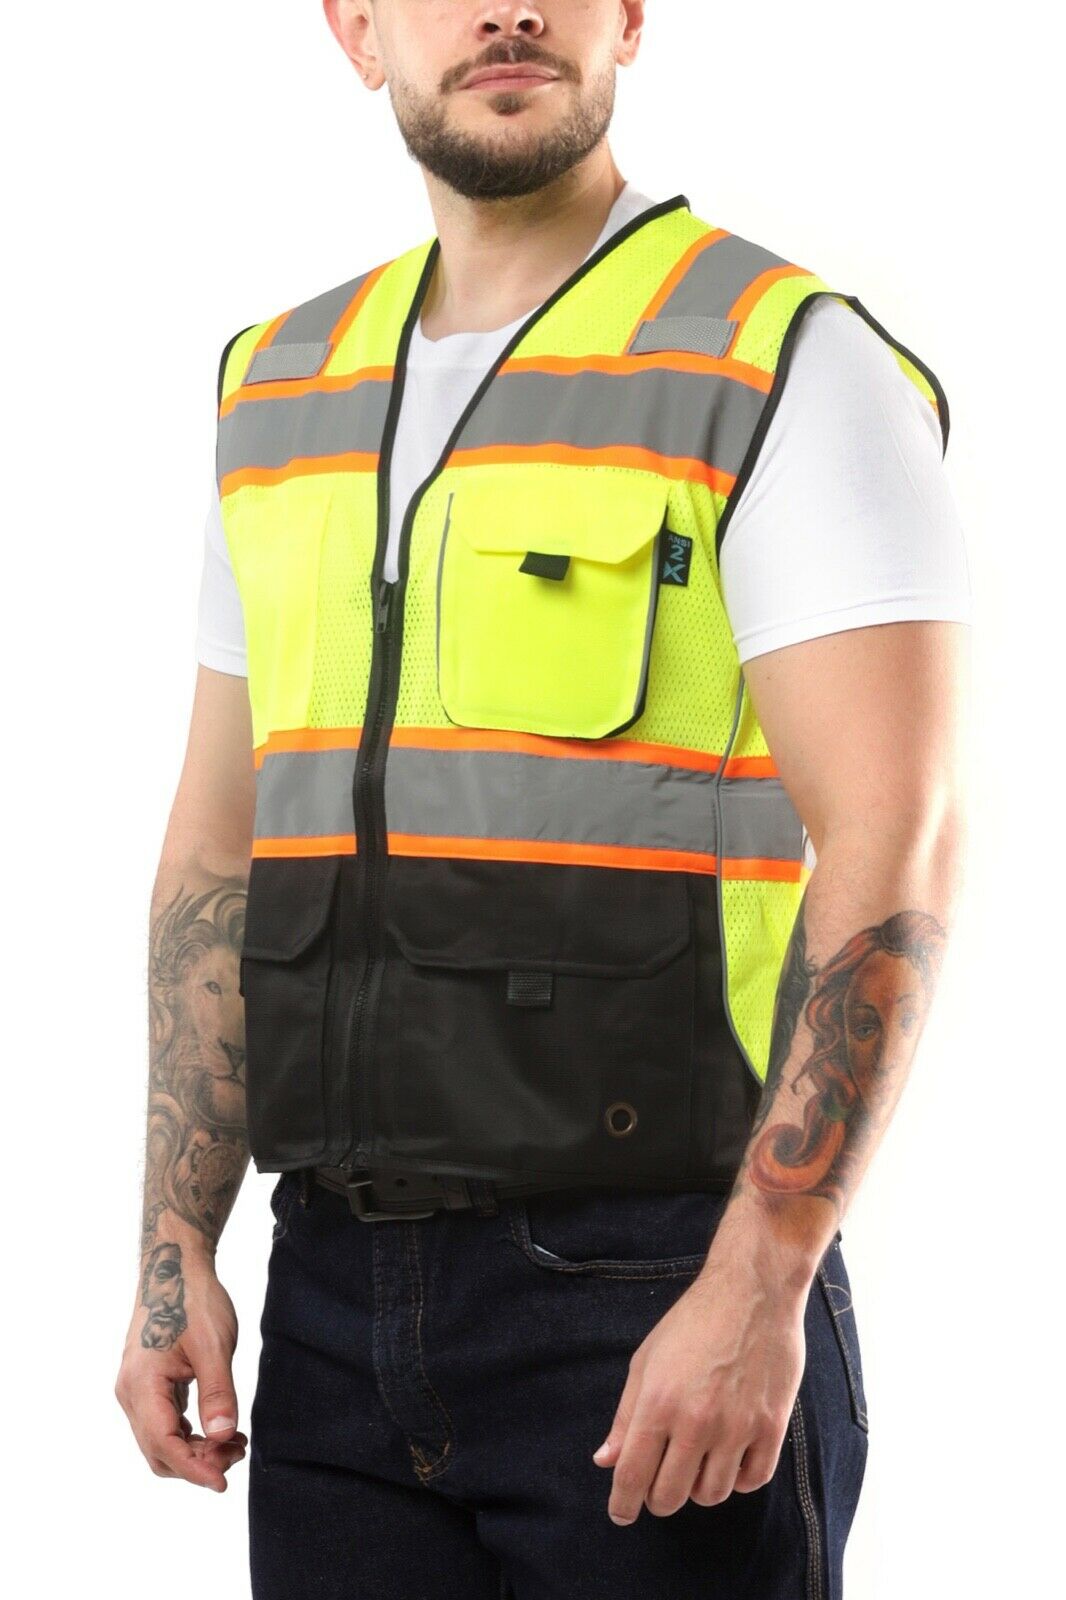 Kolossus High Visibility Safety Vest Multi Pockets Yellow/black Class 2 Kv02